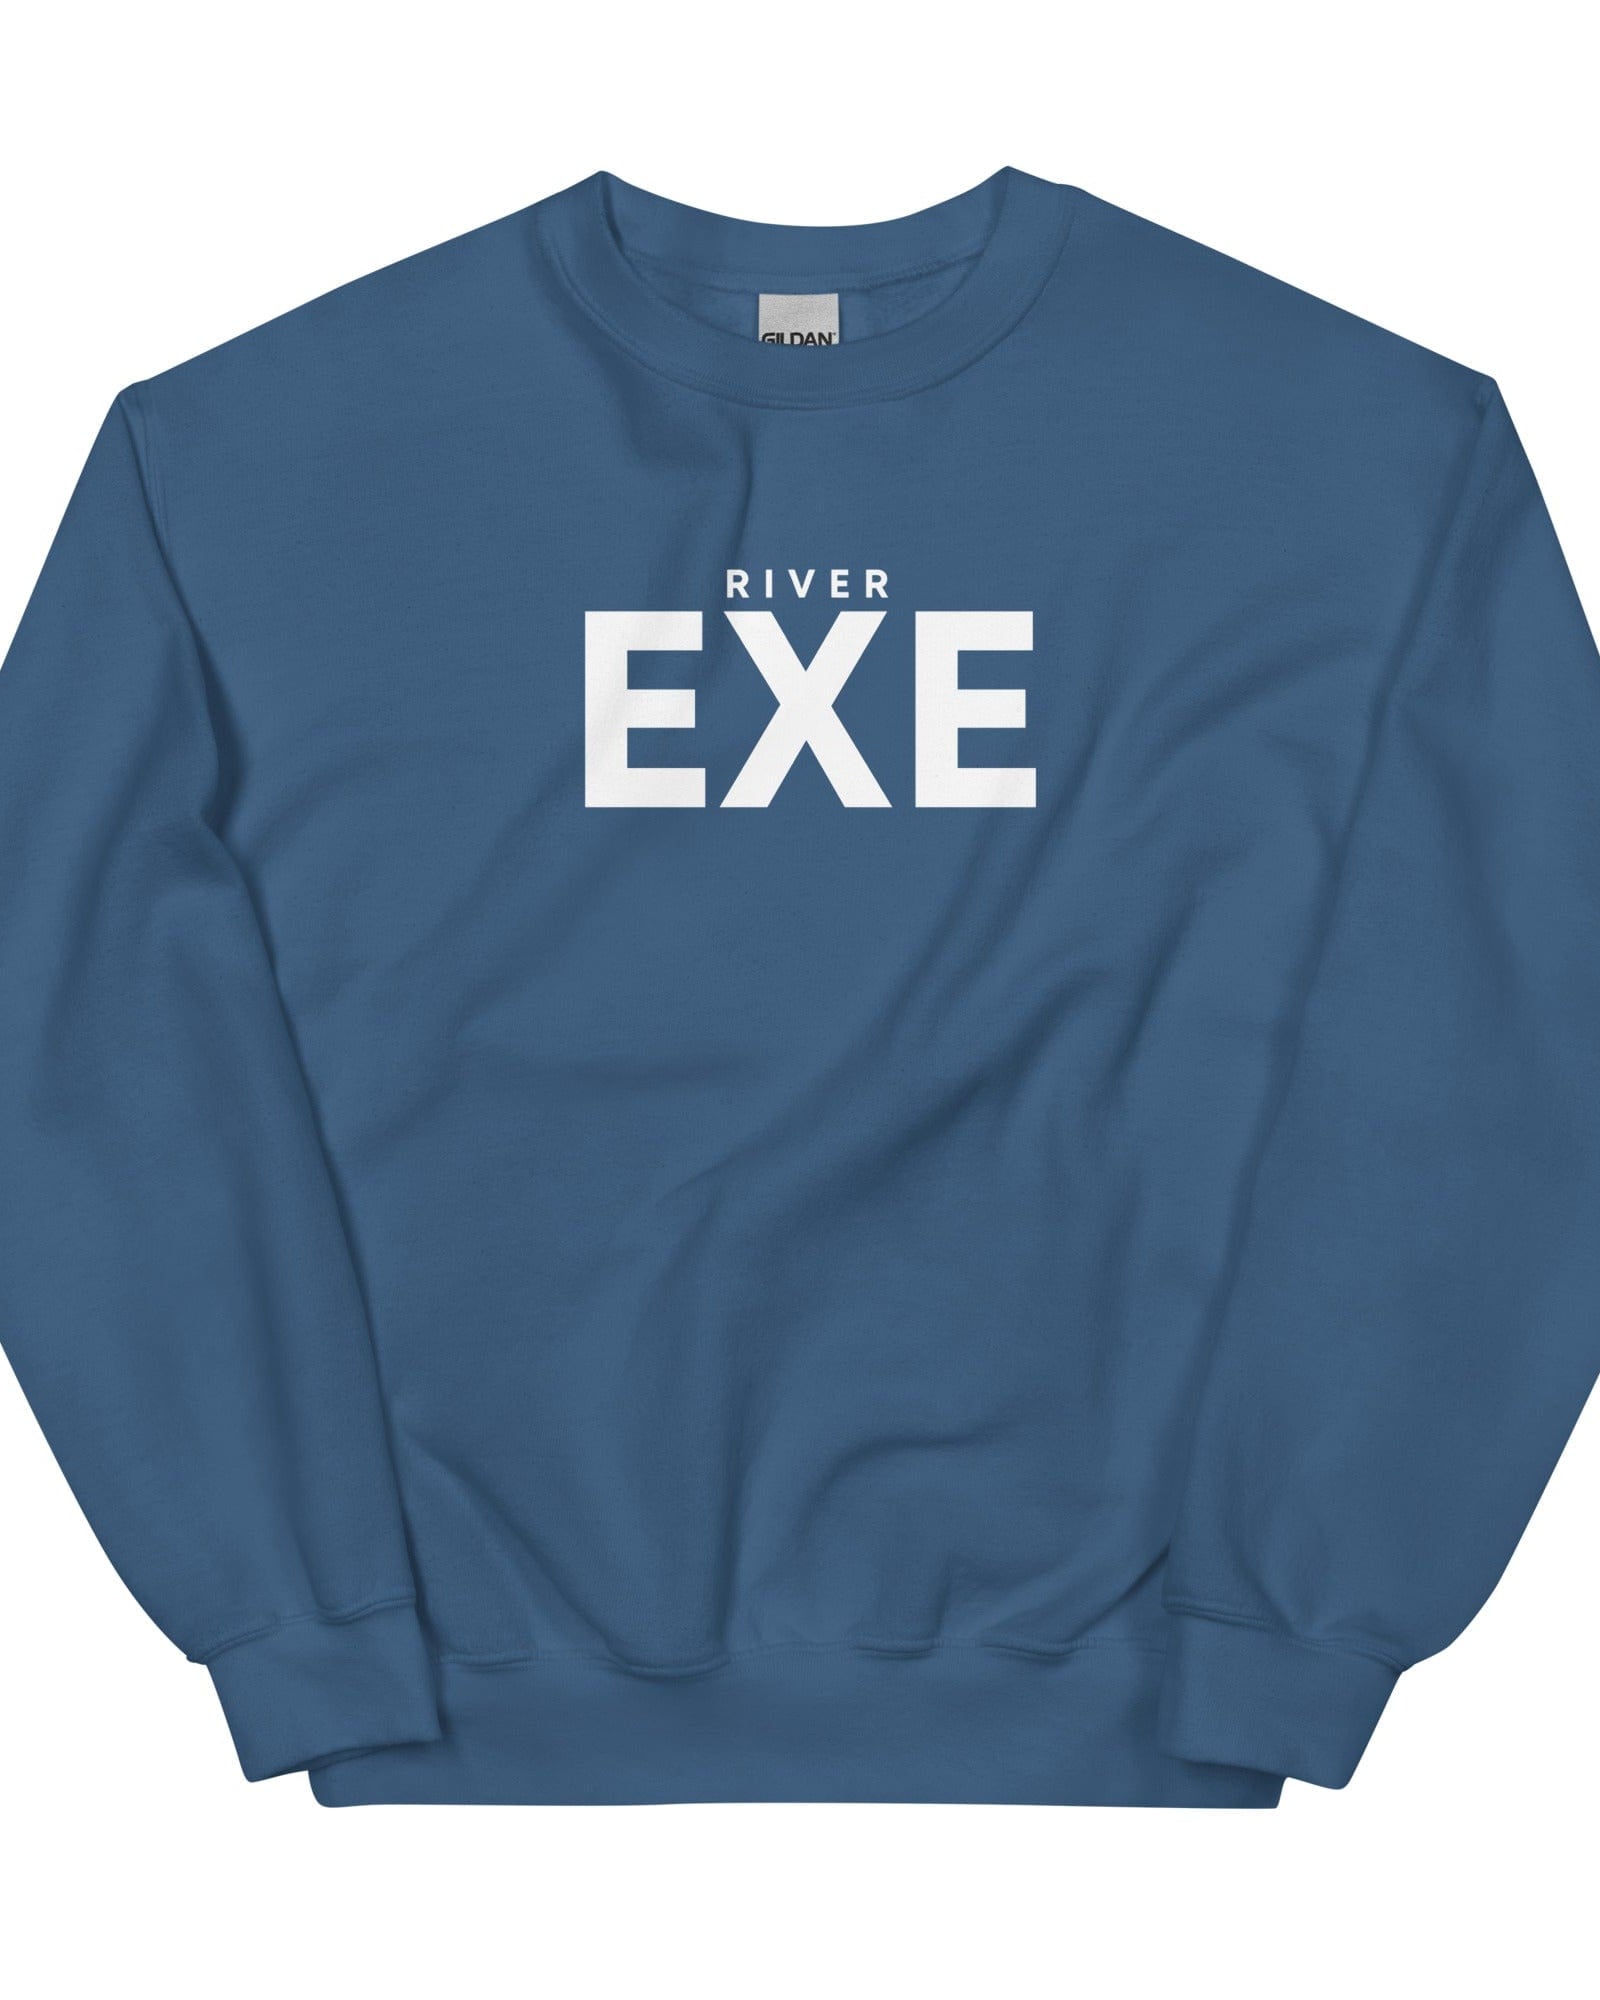 River Exe Sweatshirt | Exeter Shop Indigo Blue / S Sweatshirt Jolly & Goode